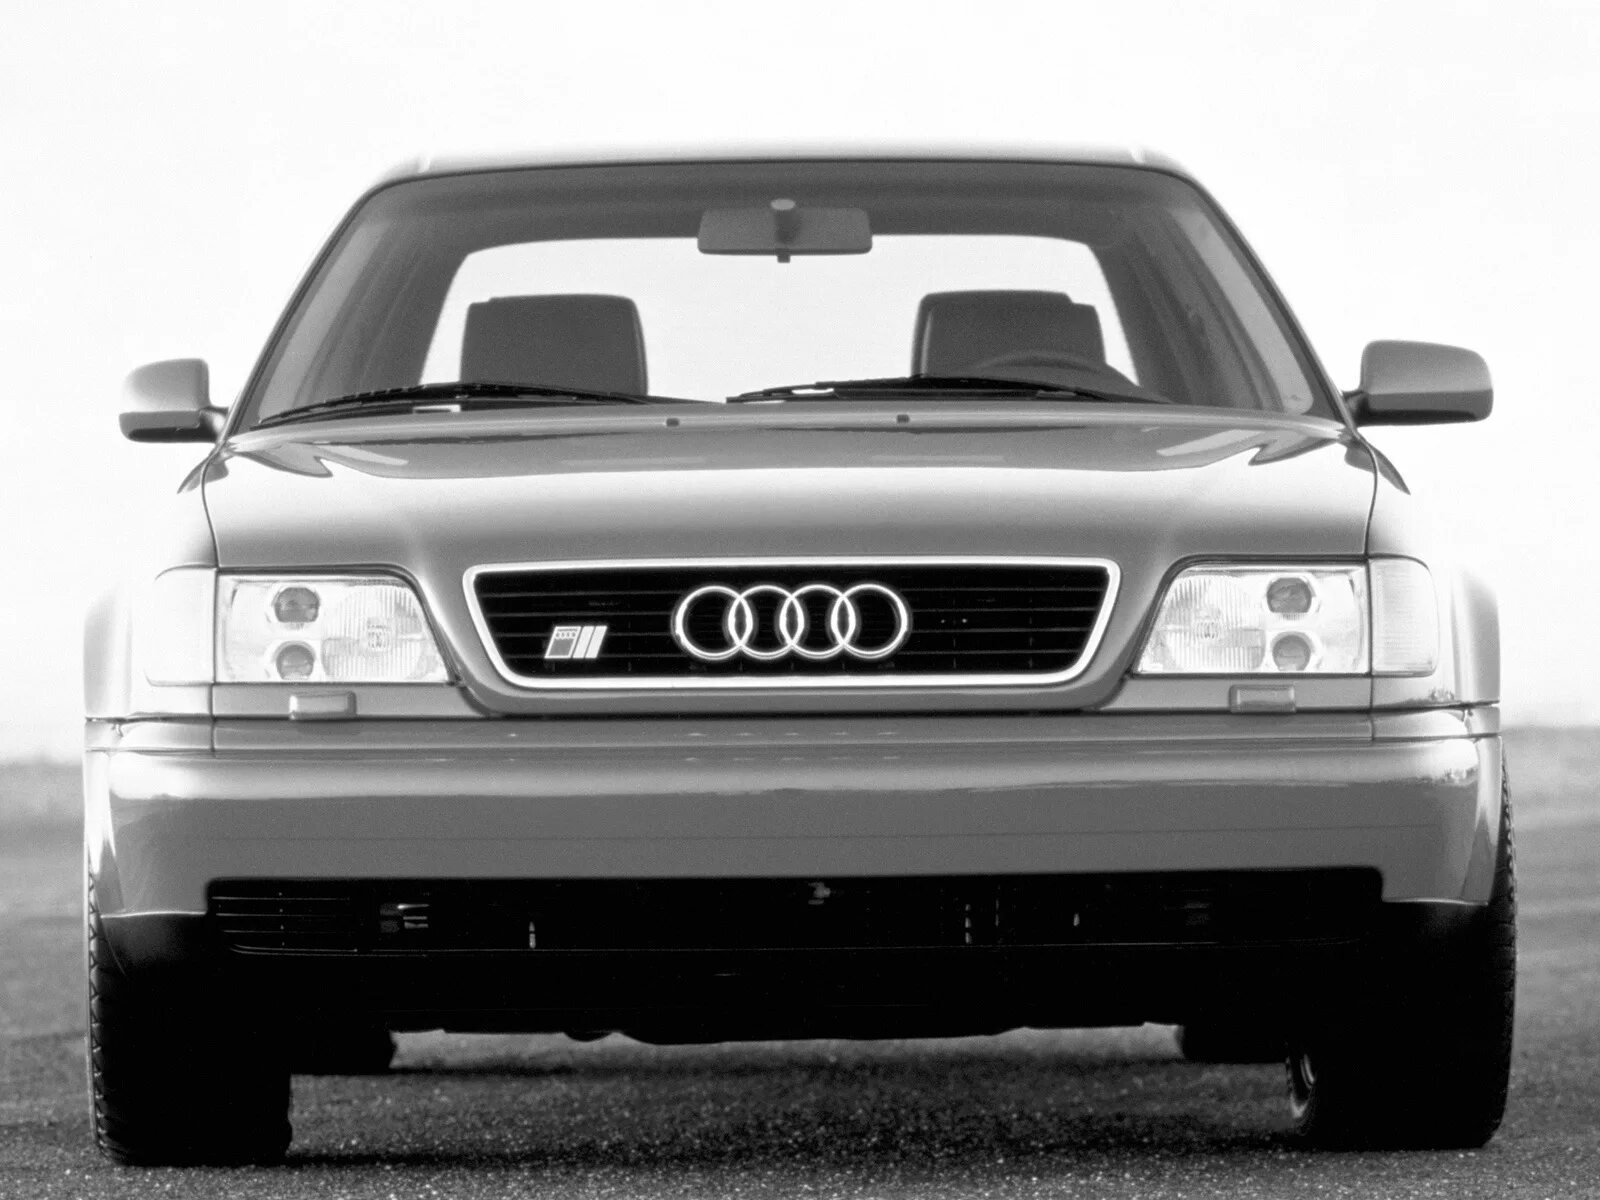 06 1994. Audi a6 c4 1994. Audi a6 c4, 1994-1997, седан. Ауди s6 1994. Audi s4 1994.